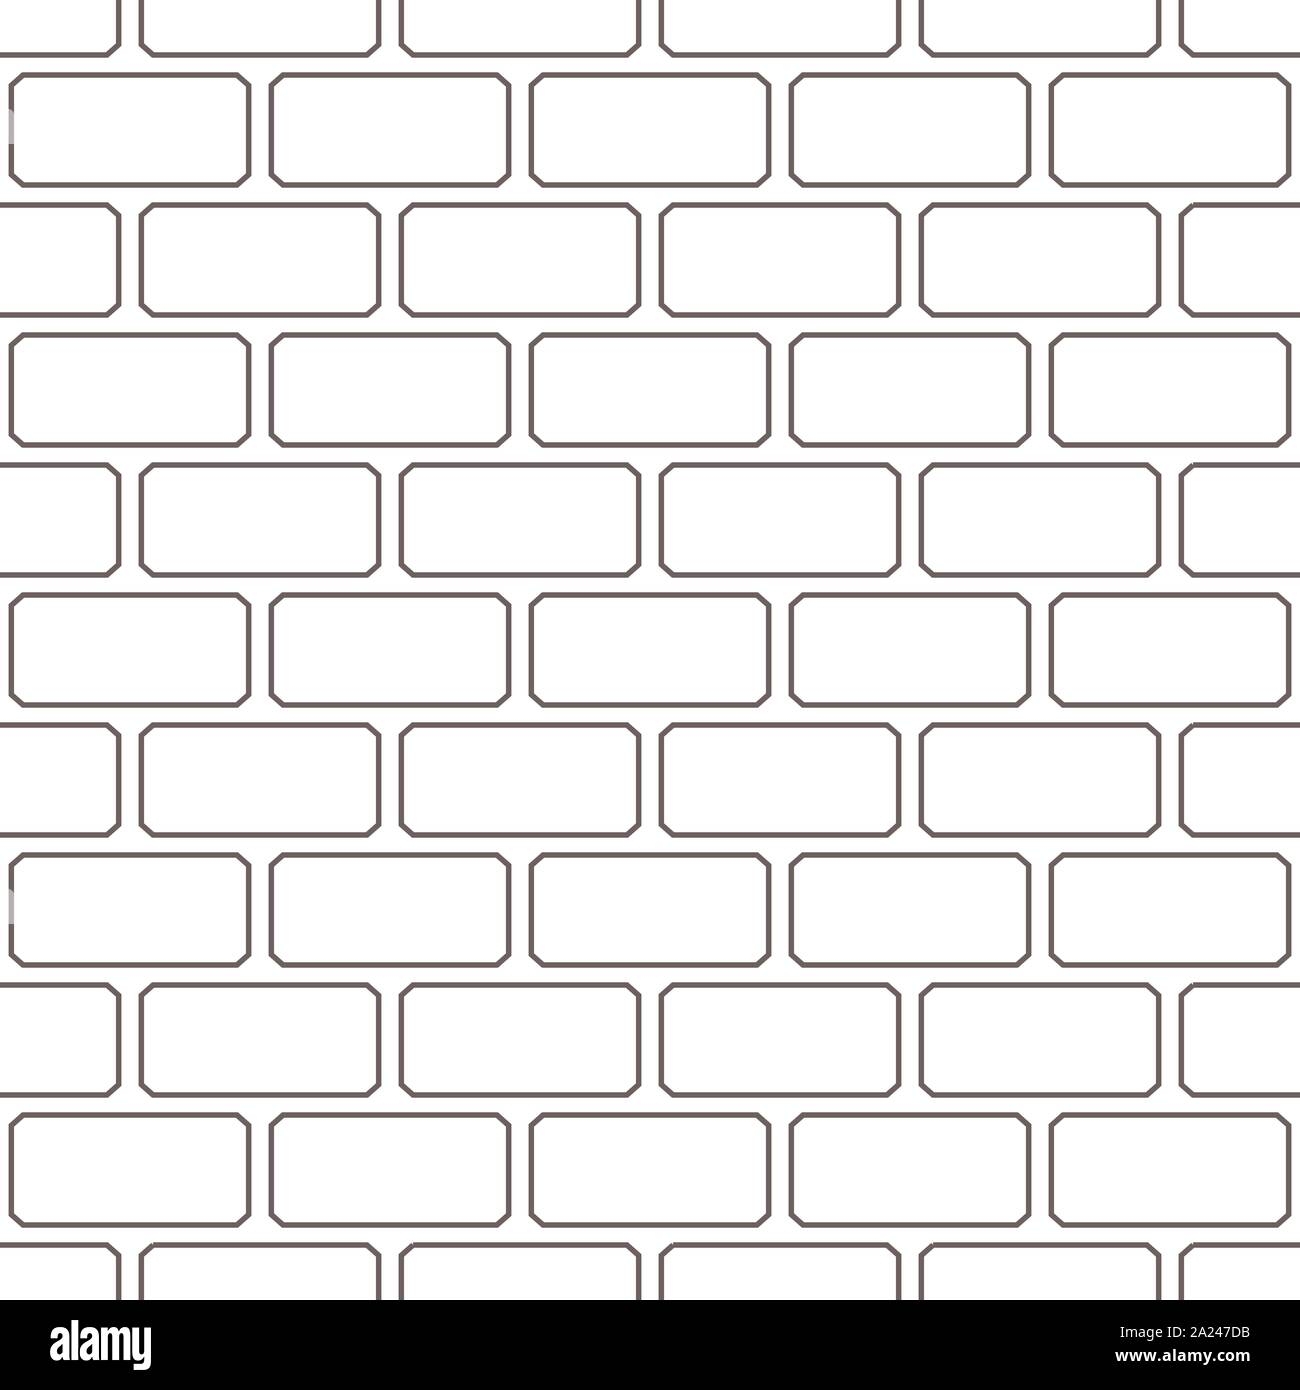 Printable Brick Wall Pattern